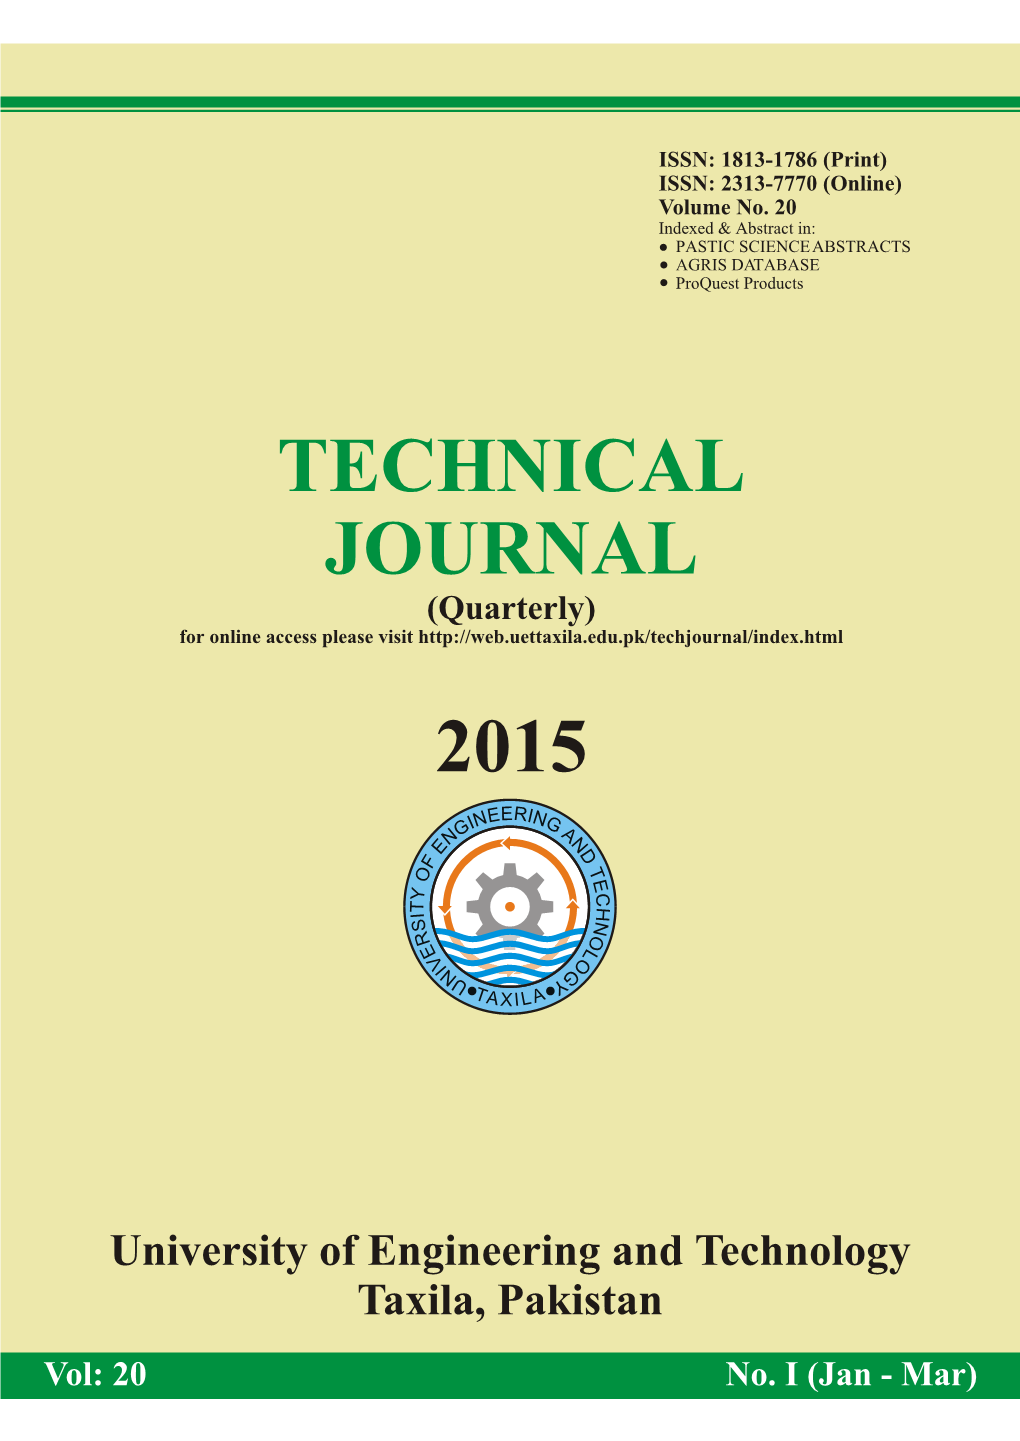 Technical Journal Vol 20 No. 1